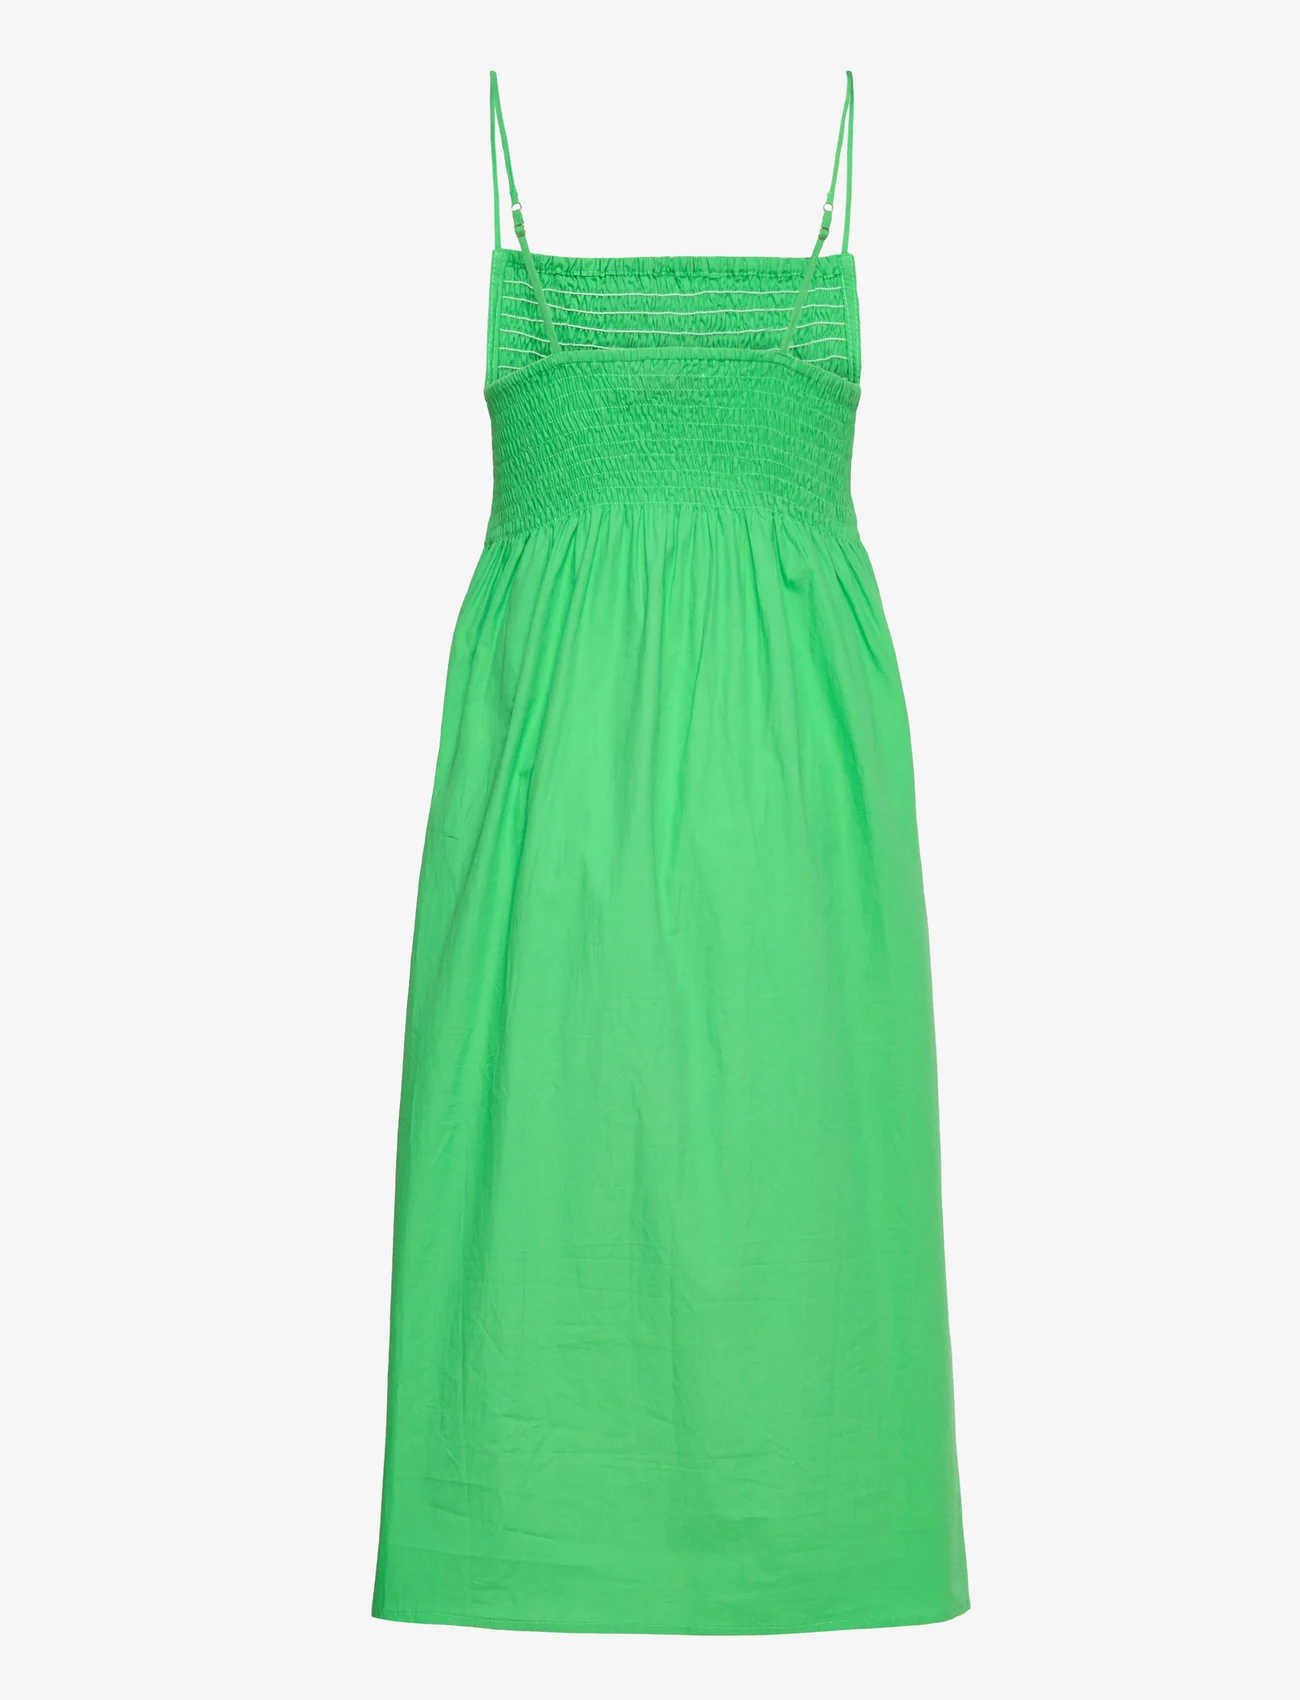 Faithfull The Brand - BRYSSA MIDI DRESS - sukienki letnie - green - 1